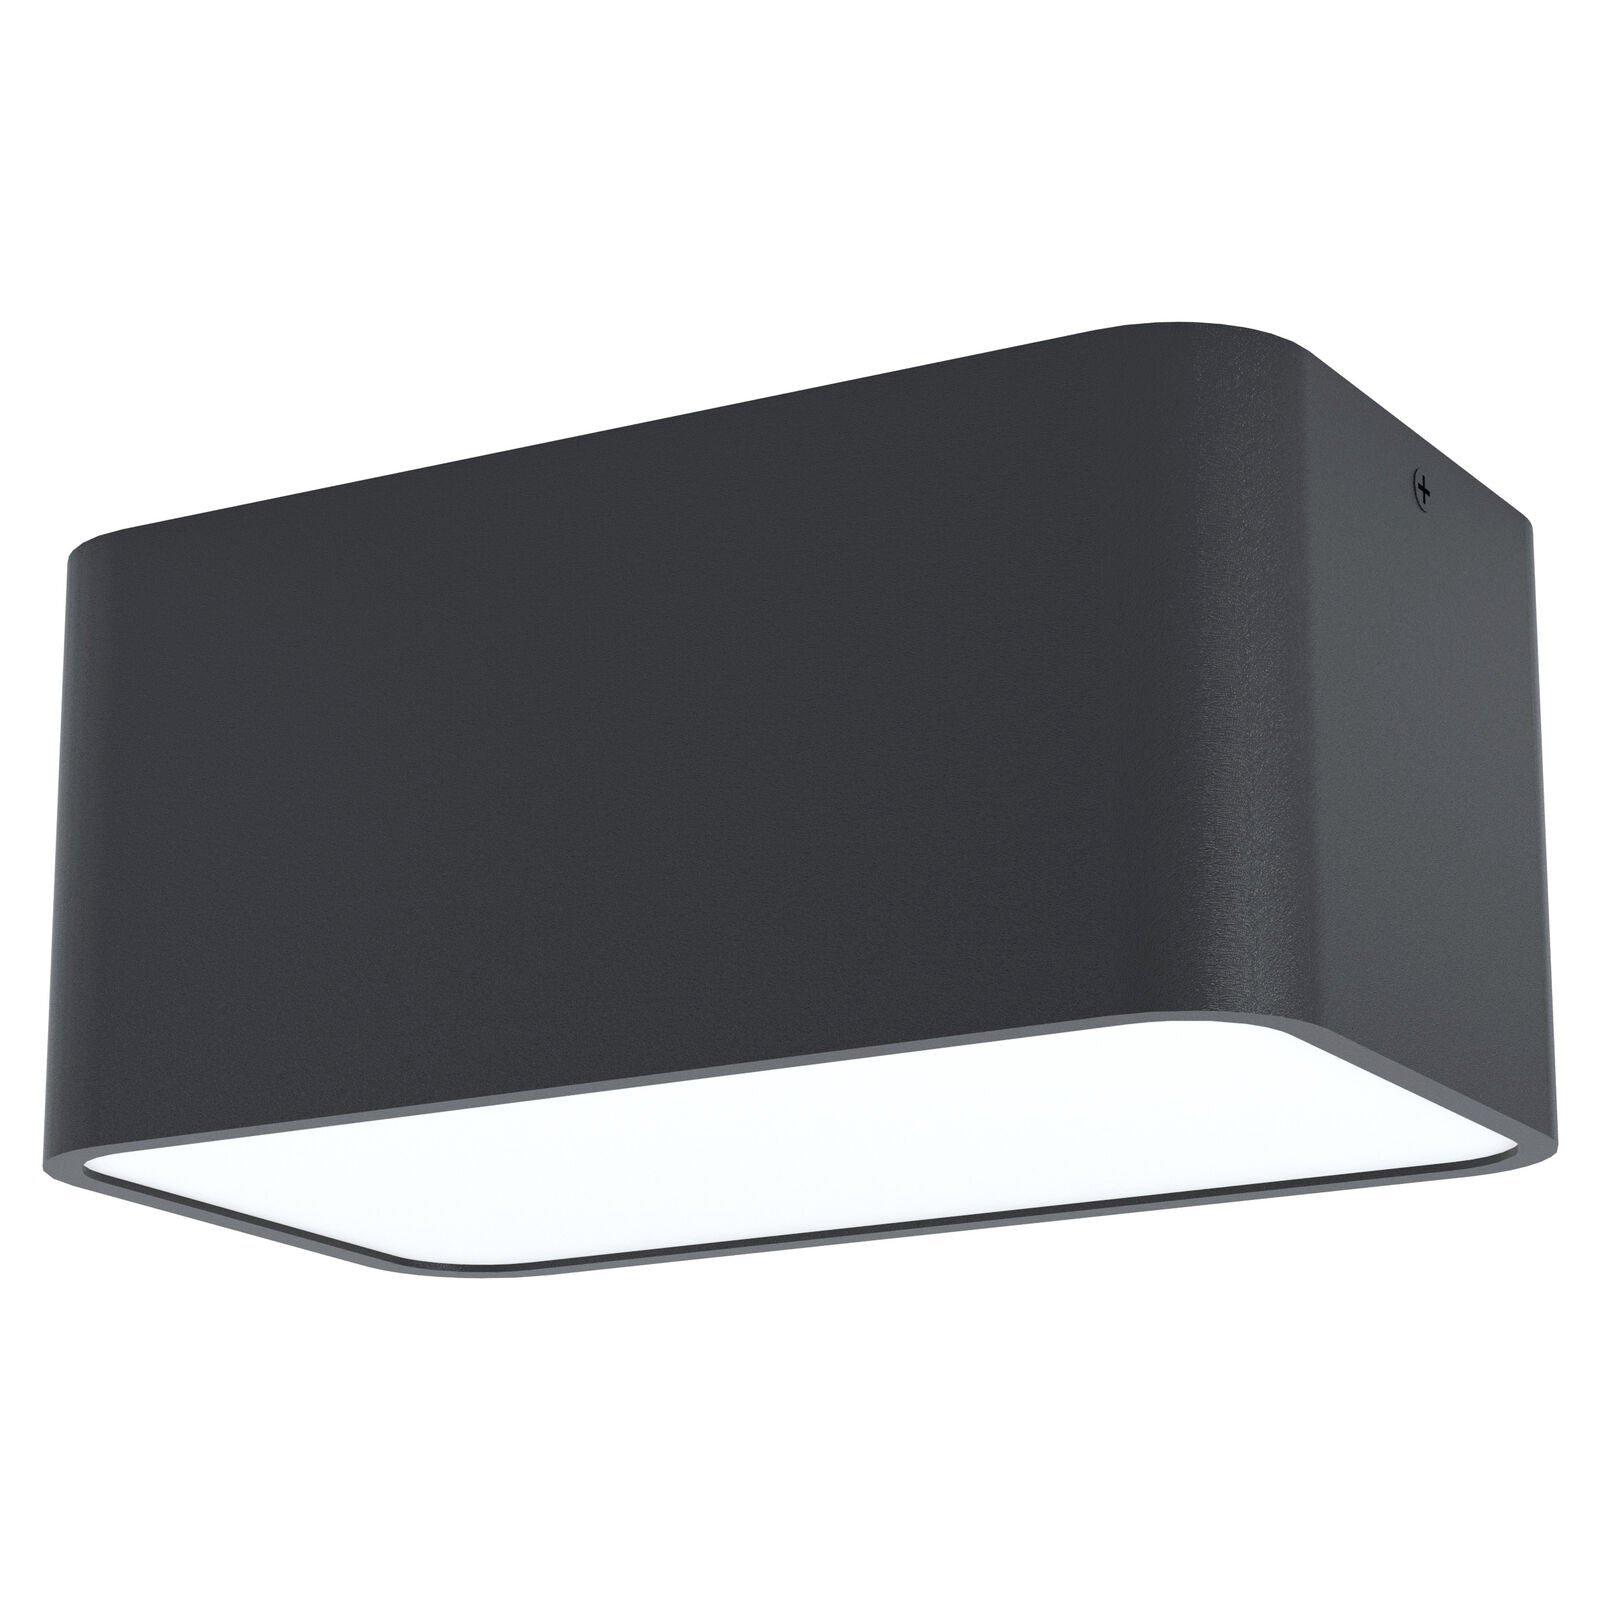 Wall / Ceiling Light Black Square Accent Downlight 2 x 28W E27 Bulb